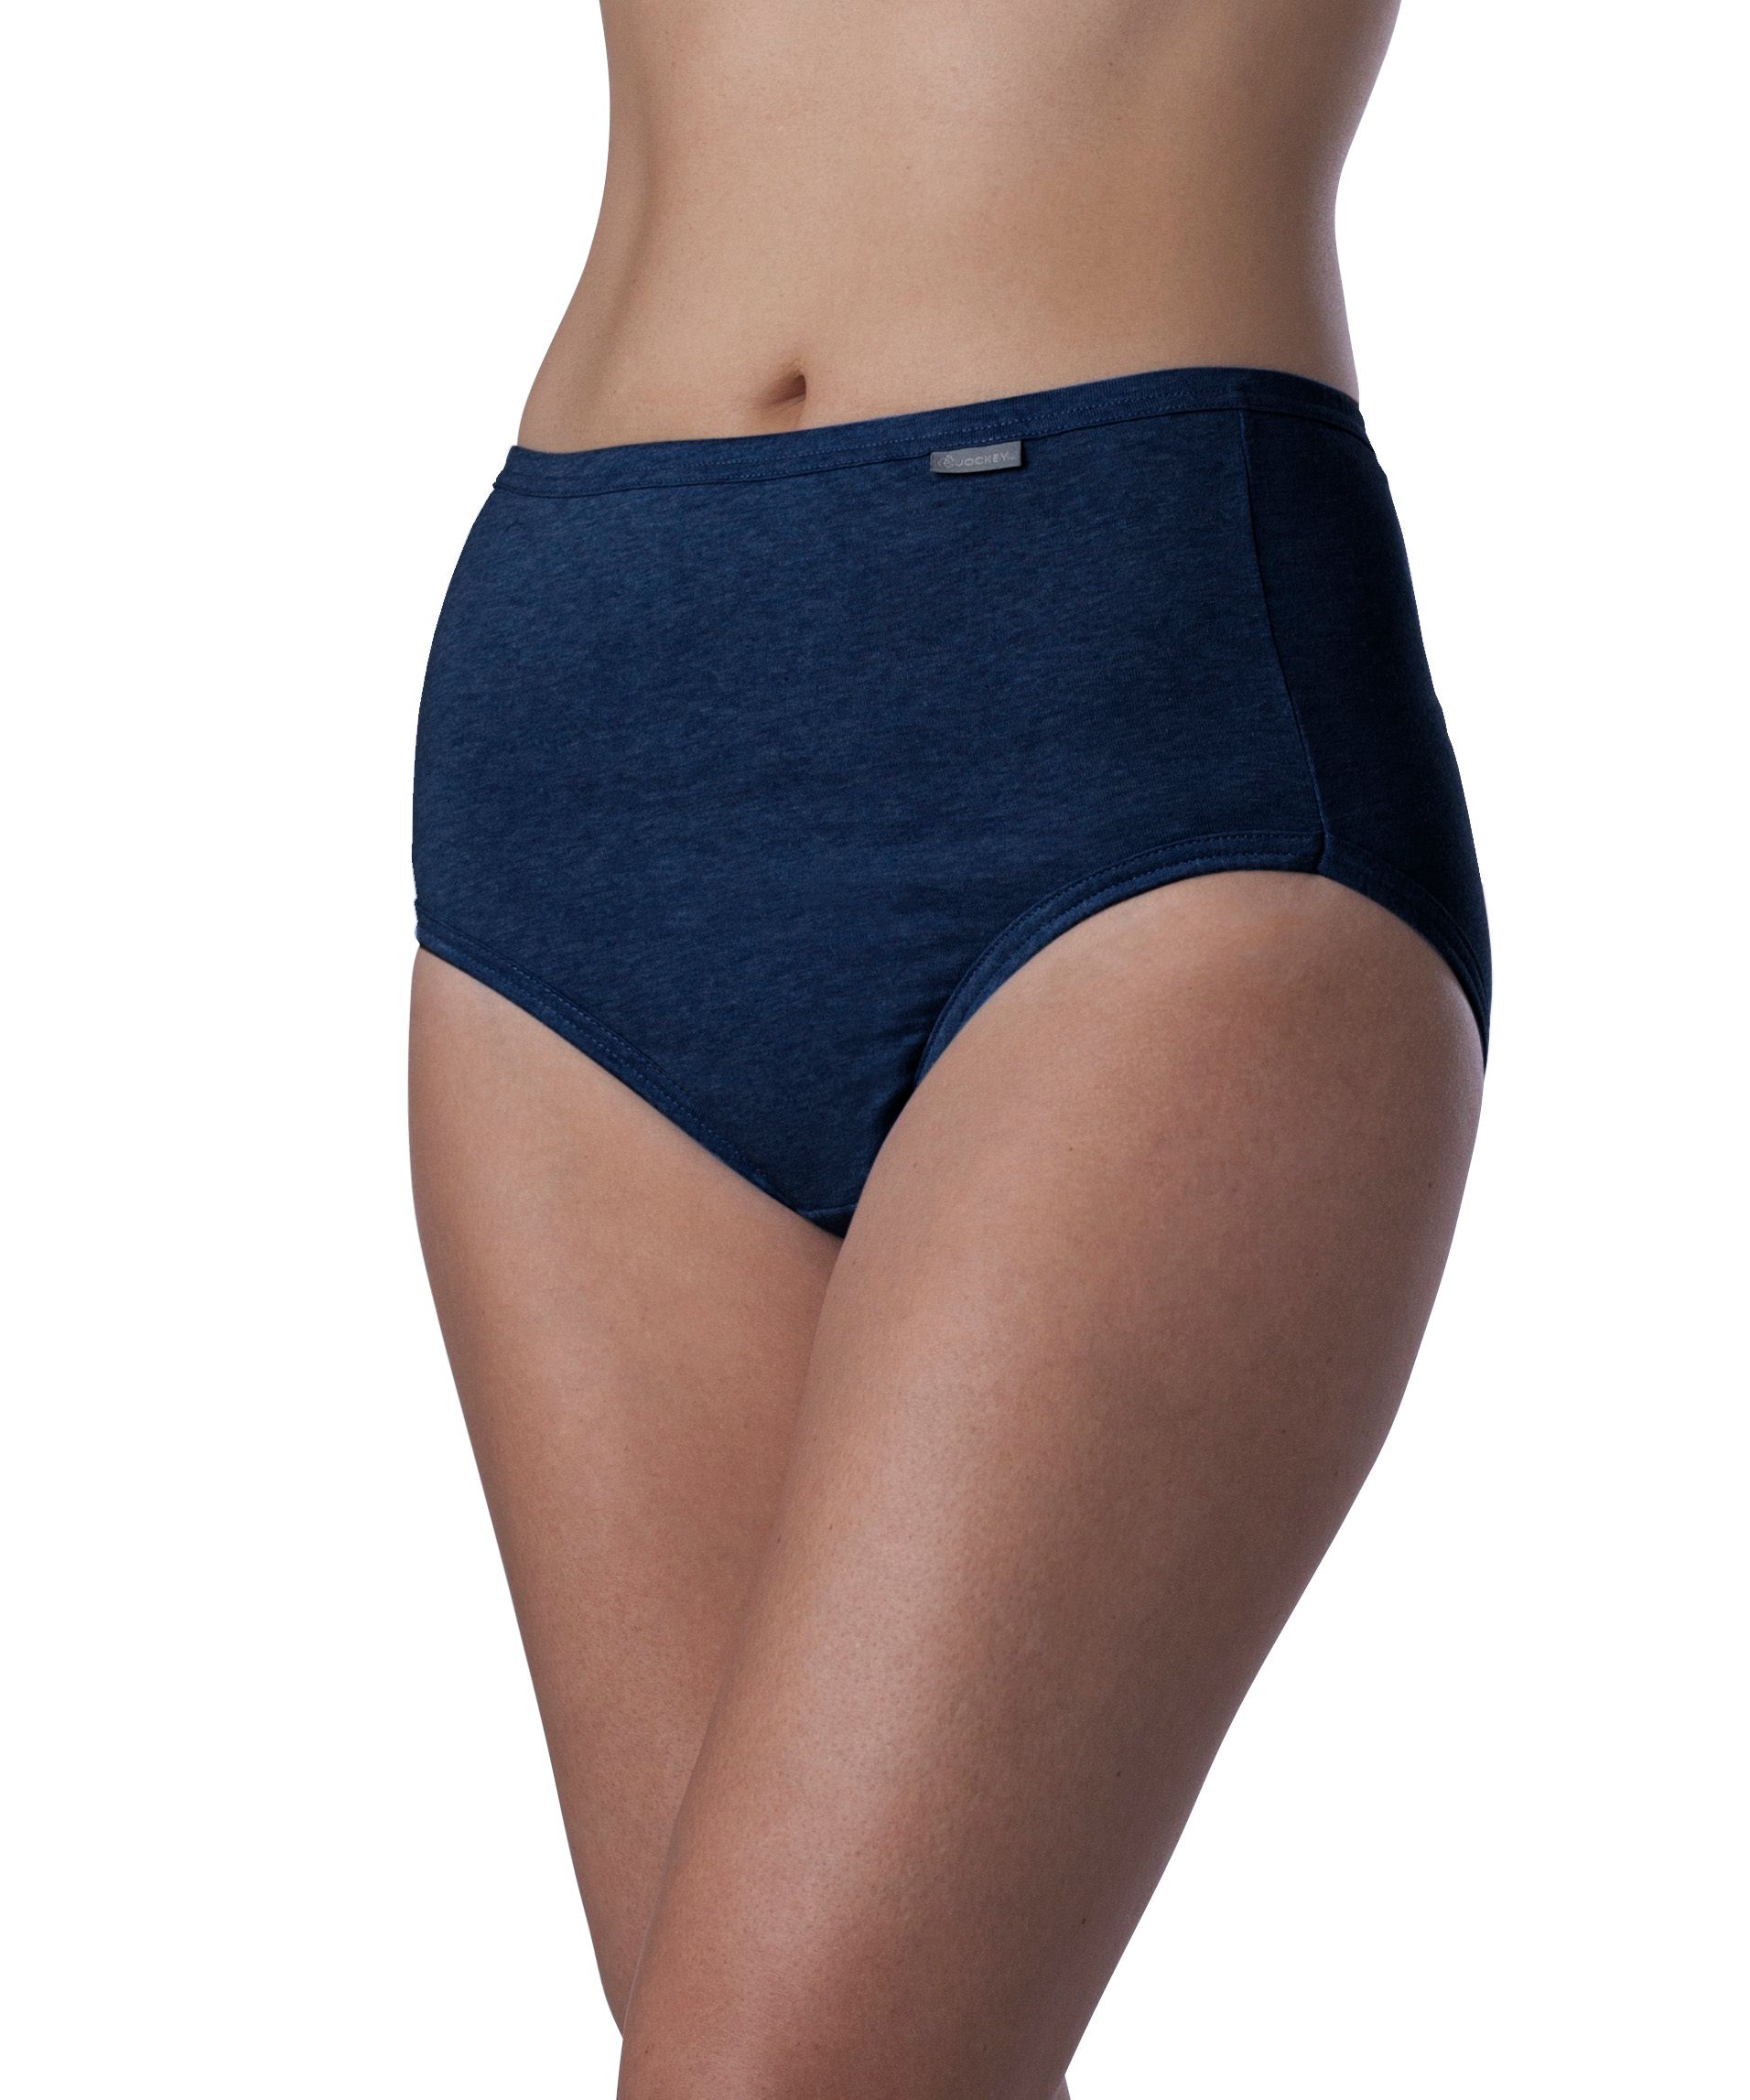 Jockey Women's 3 Pack Basic Briefs Underwear - Extended Size